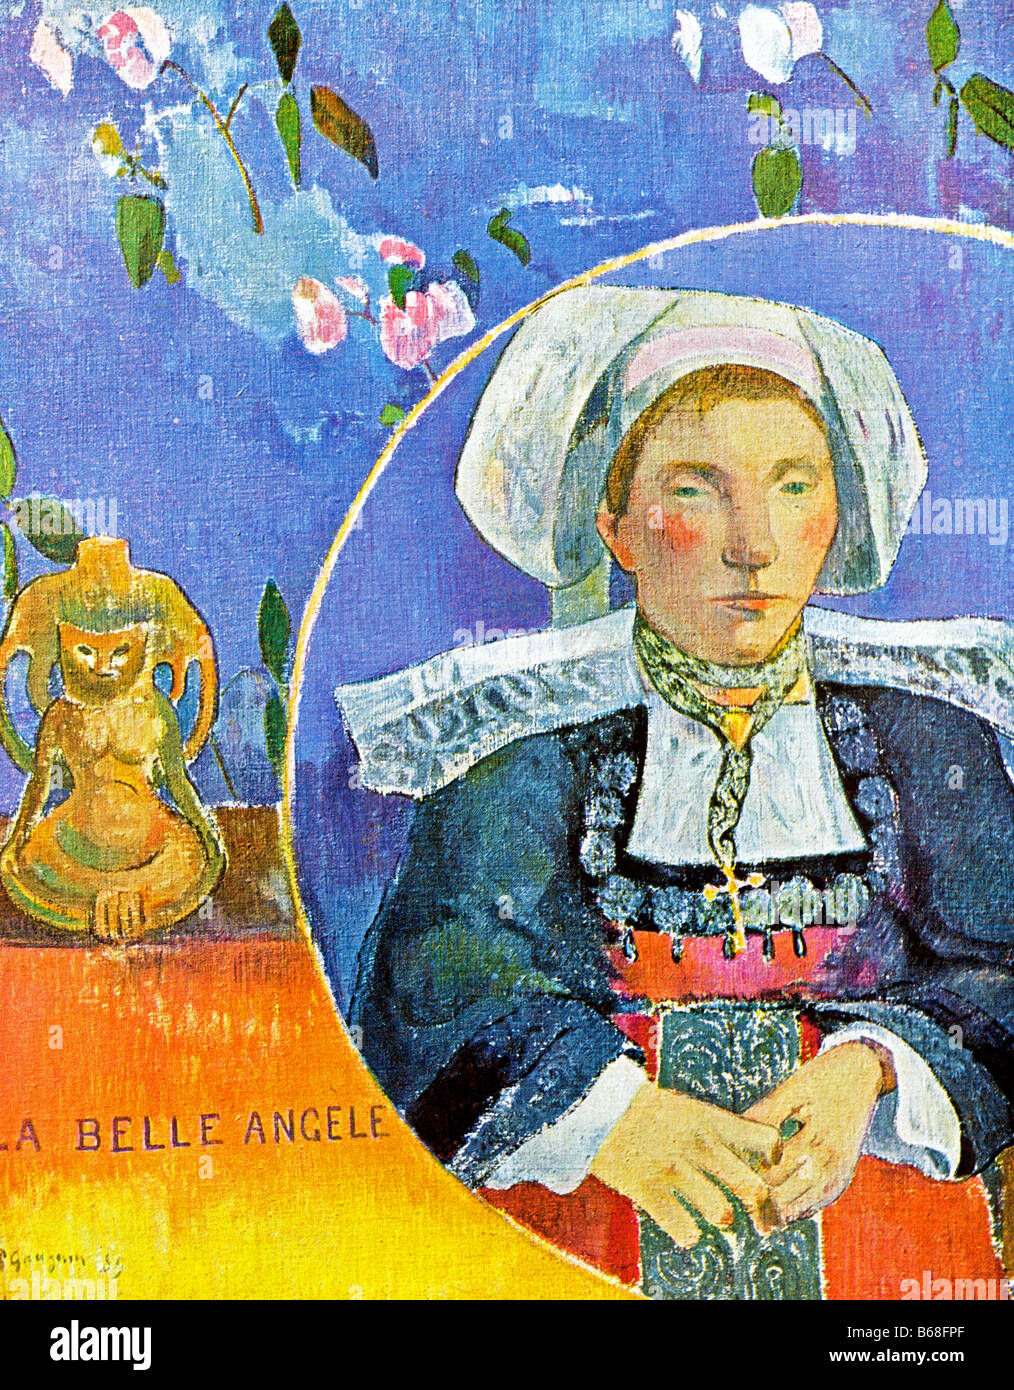 "La belle angele' da Paul Gauguin Foto Stock